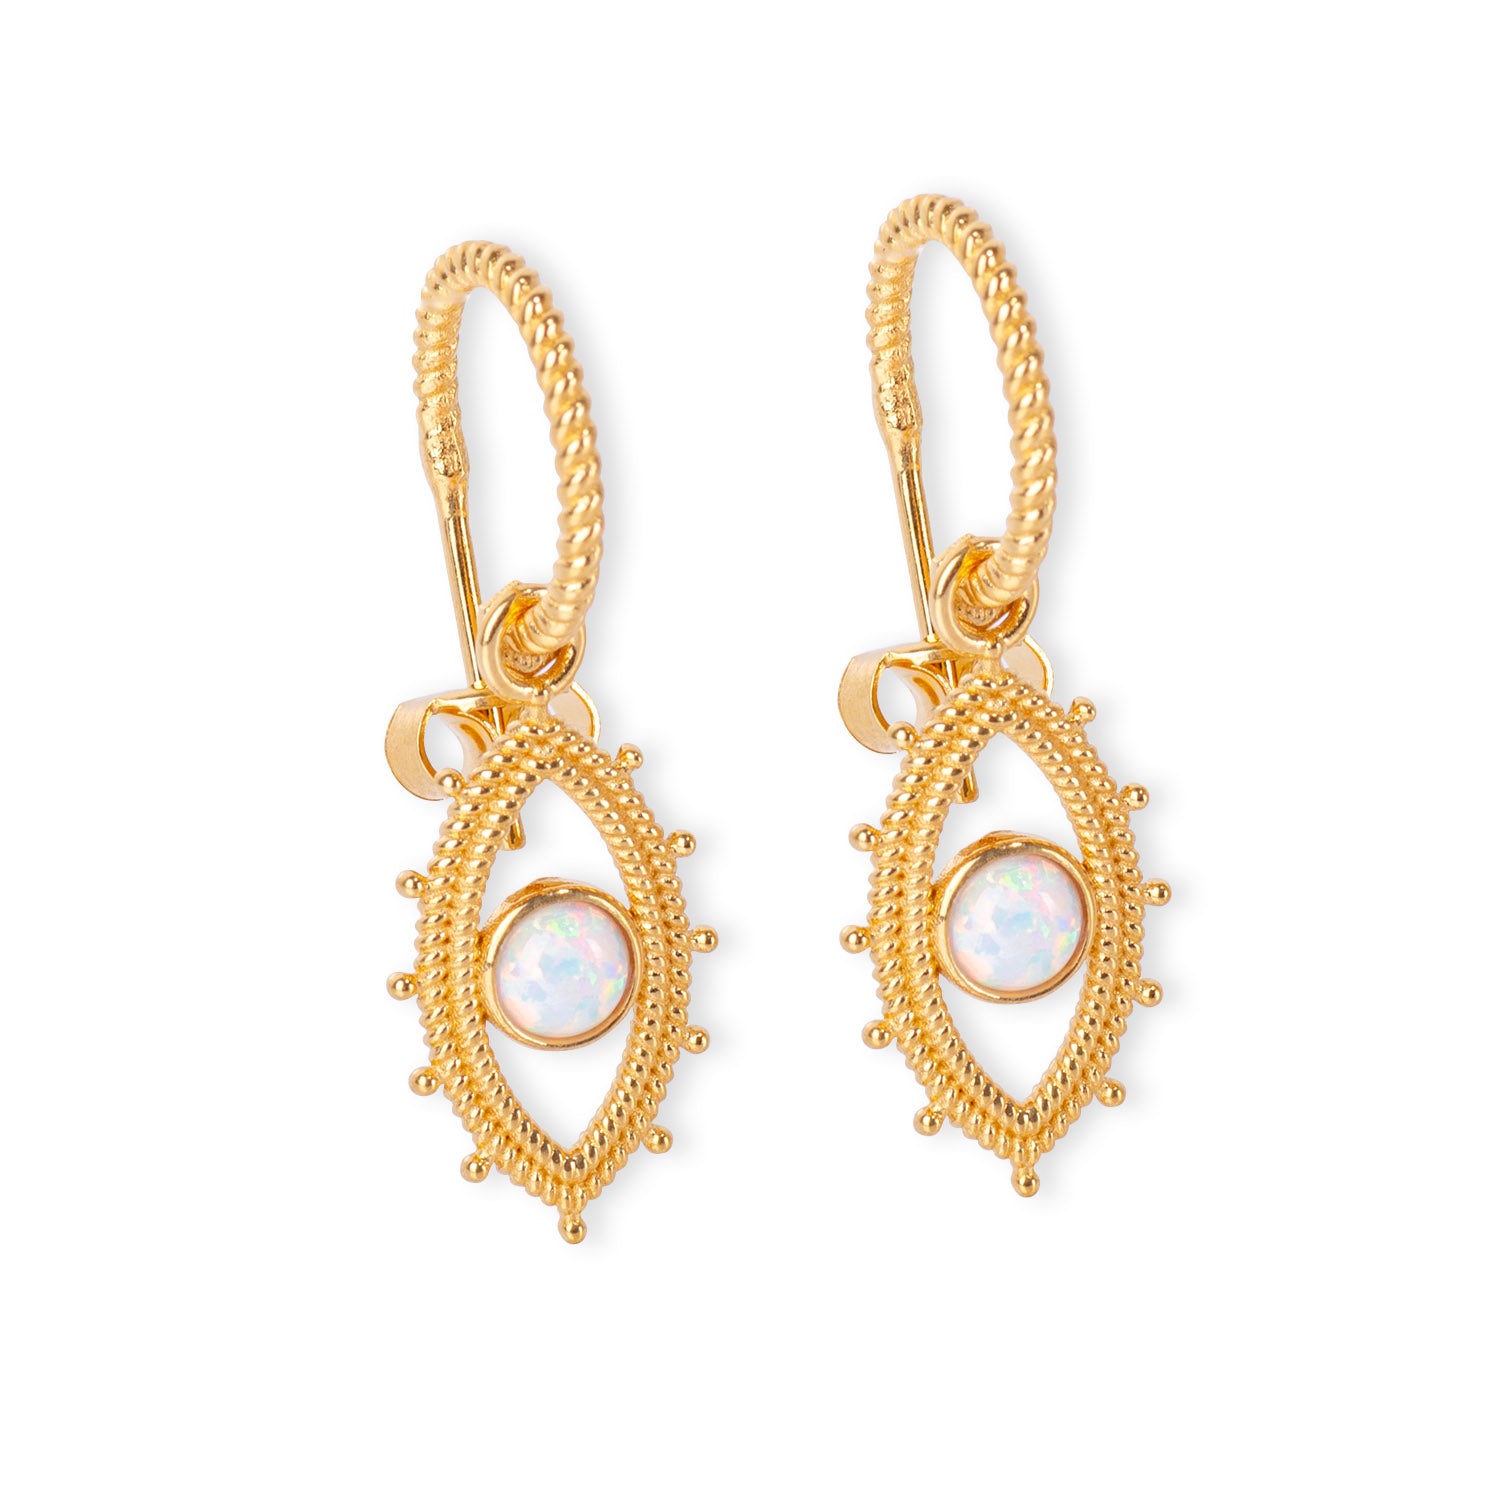 Evil Eye Opal 24K Gold Earrings - Gold Vermeil Earrings - Pretland | Spiritual Crystals & Jewelry